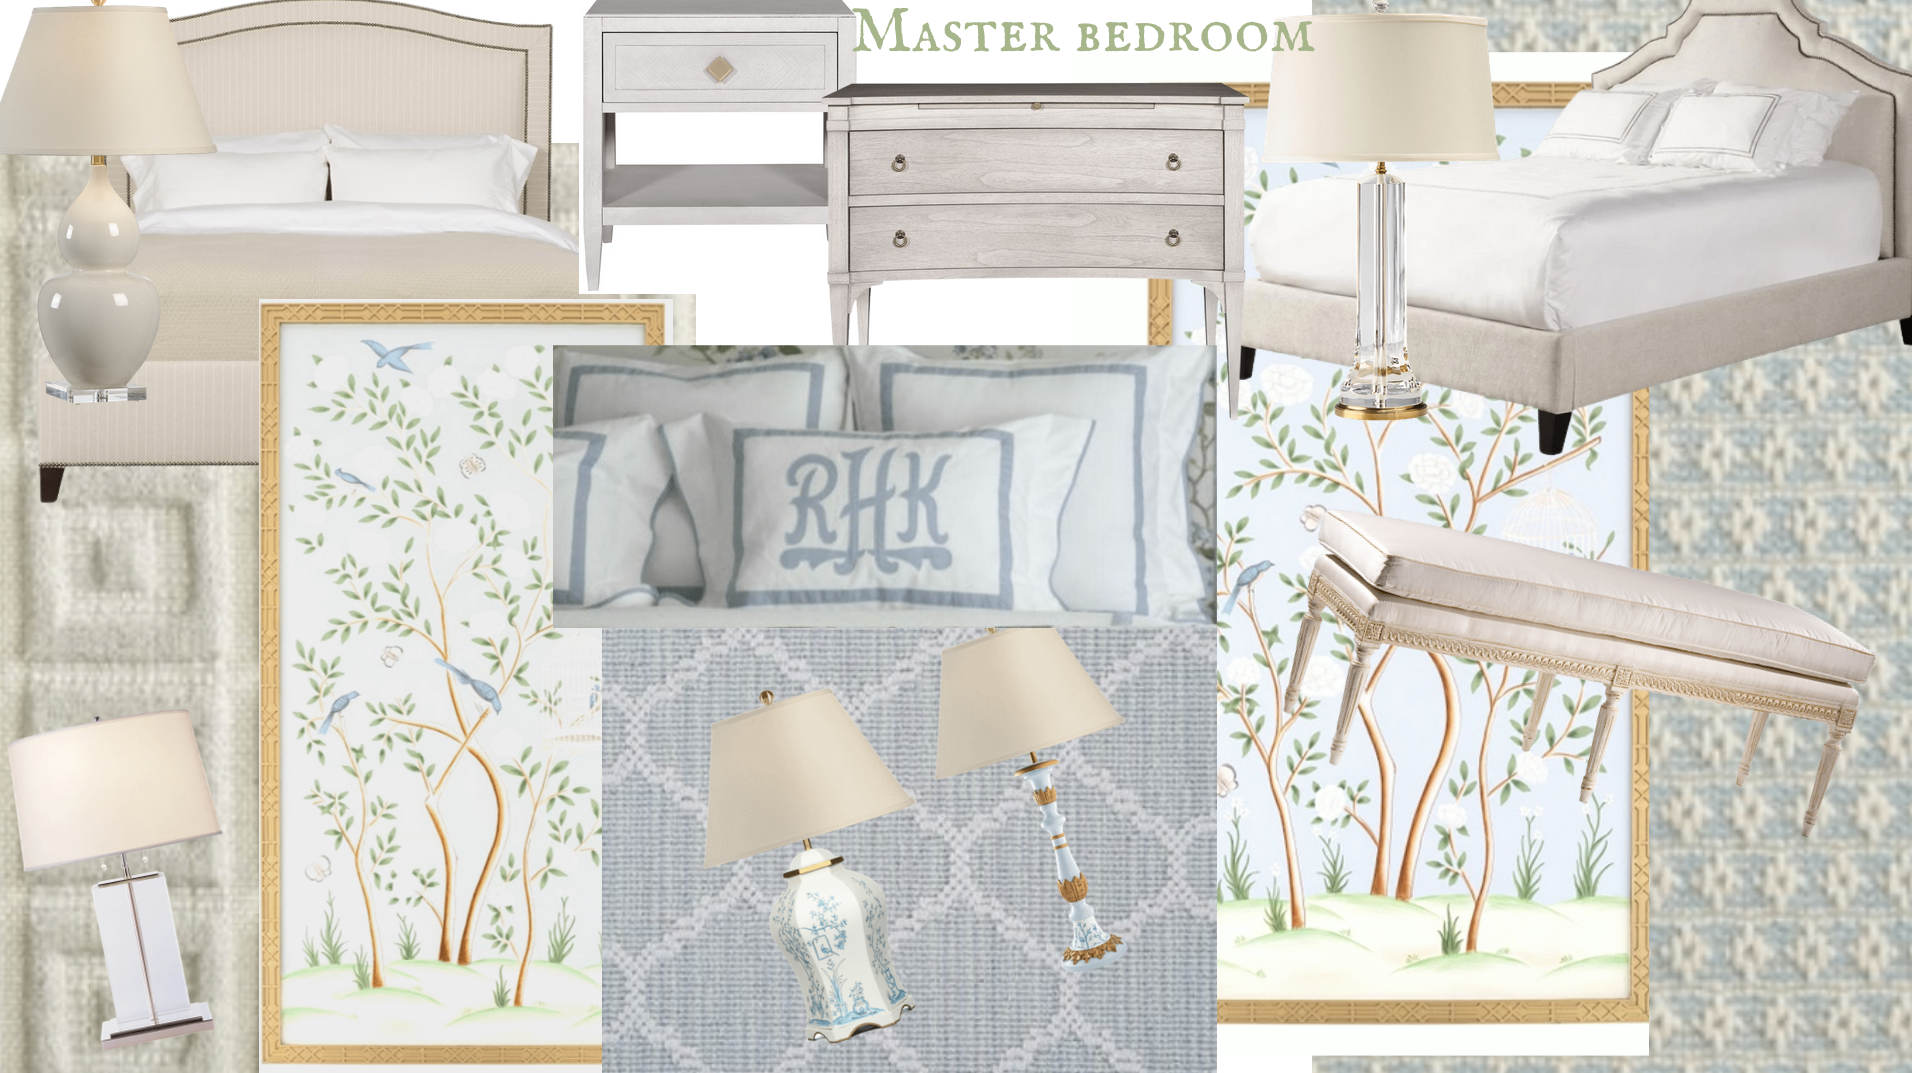 Let’s design a dream house together- the master bedroom